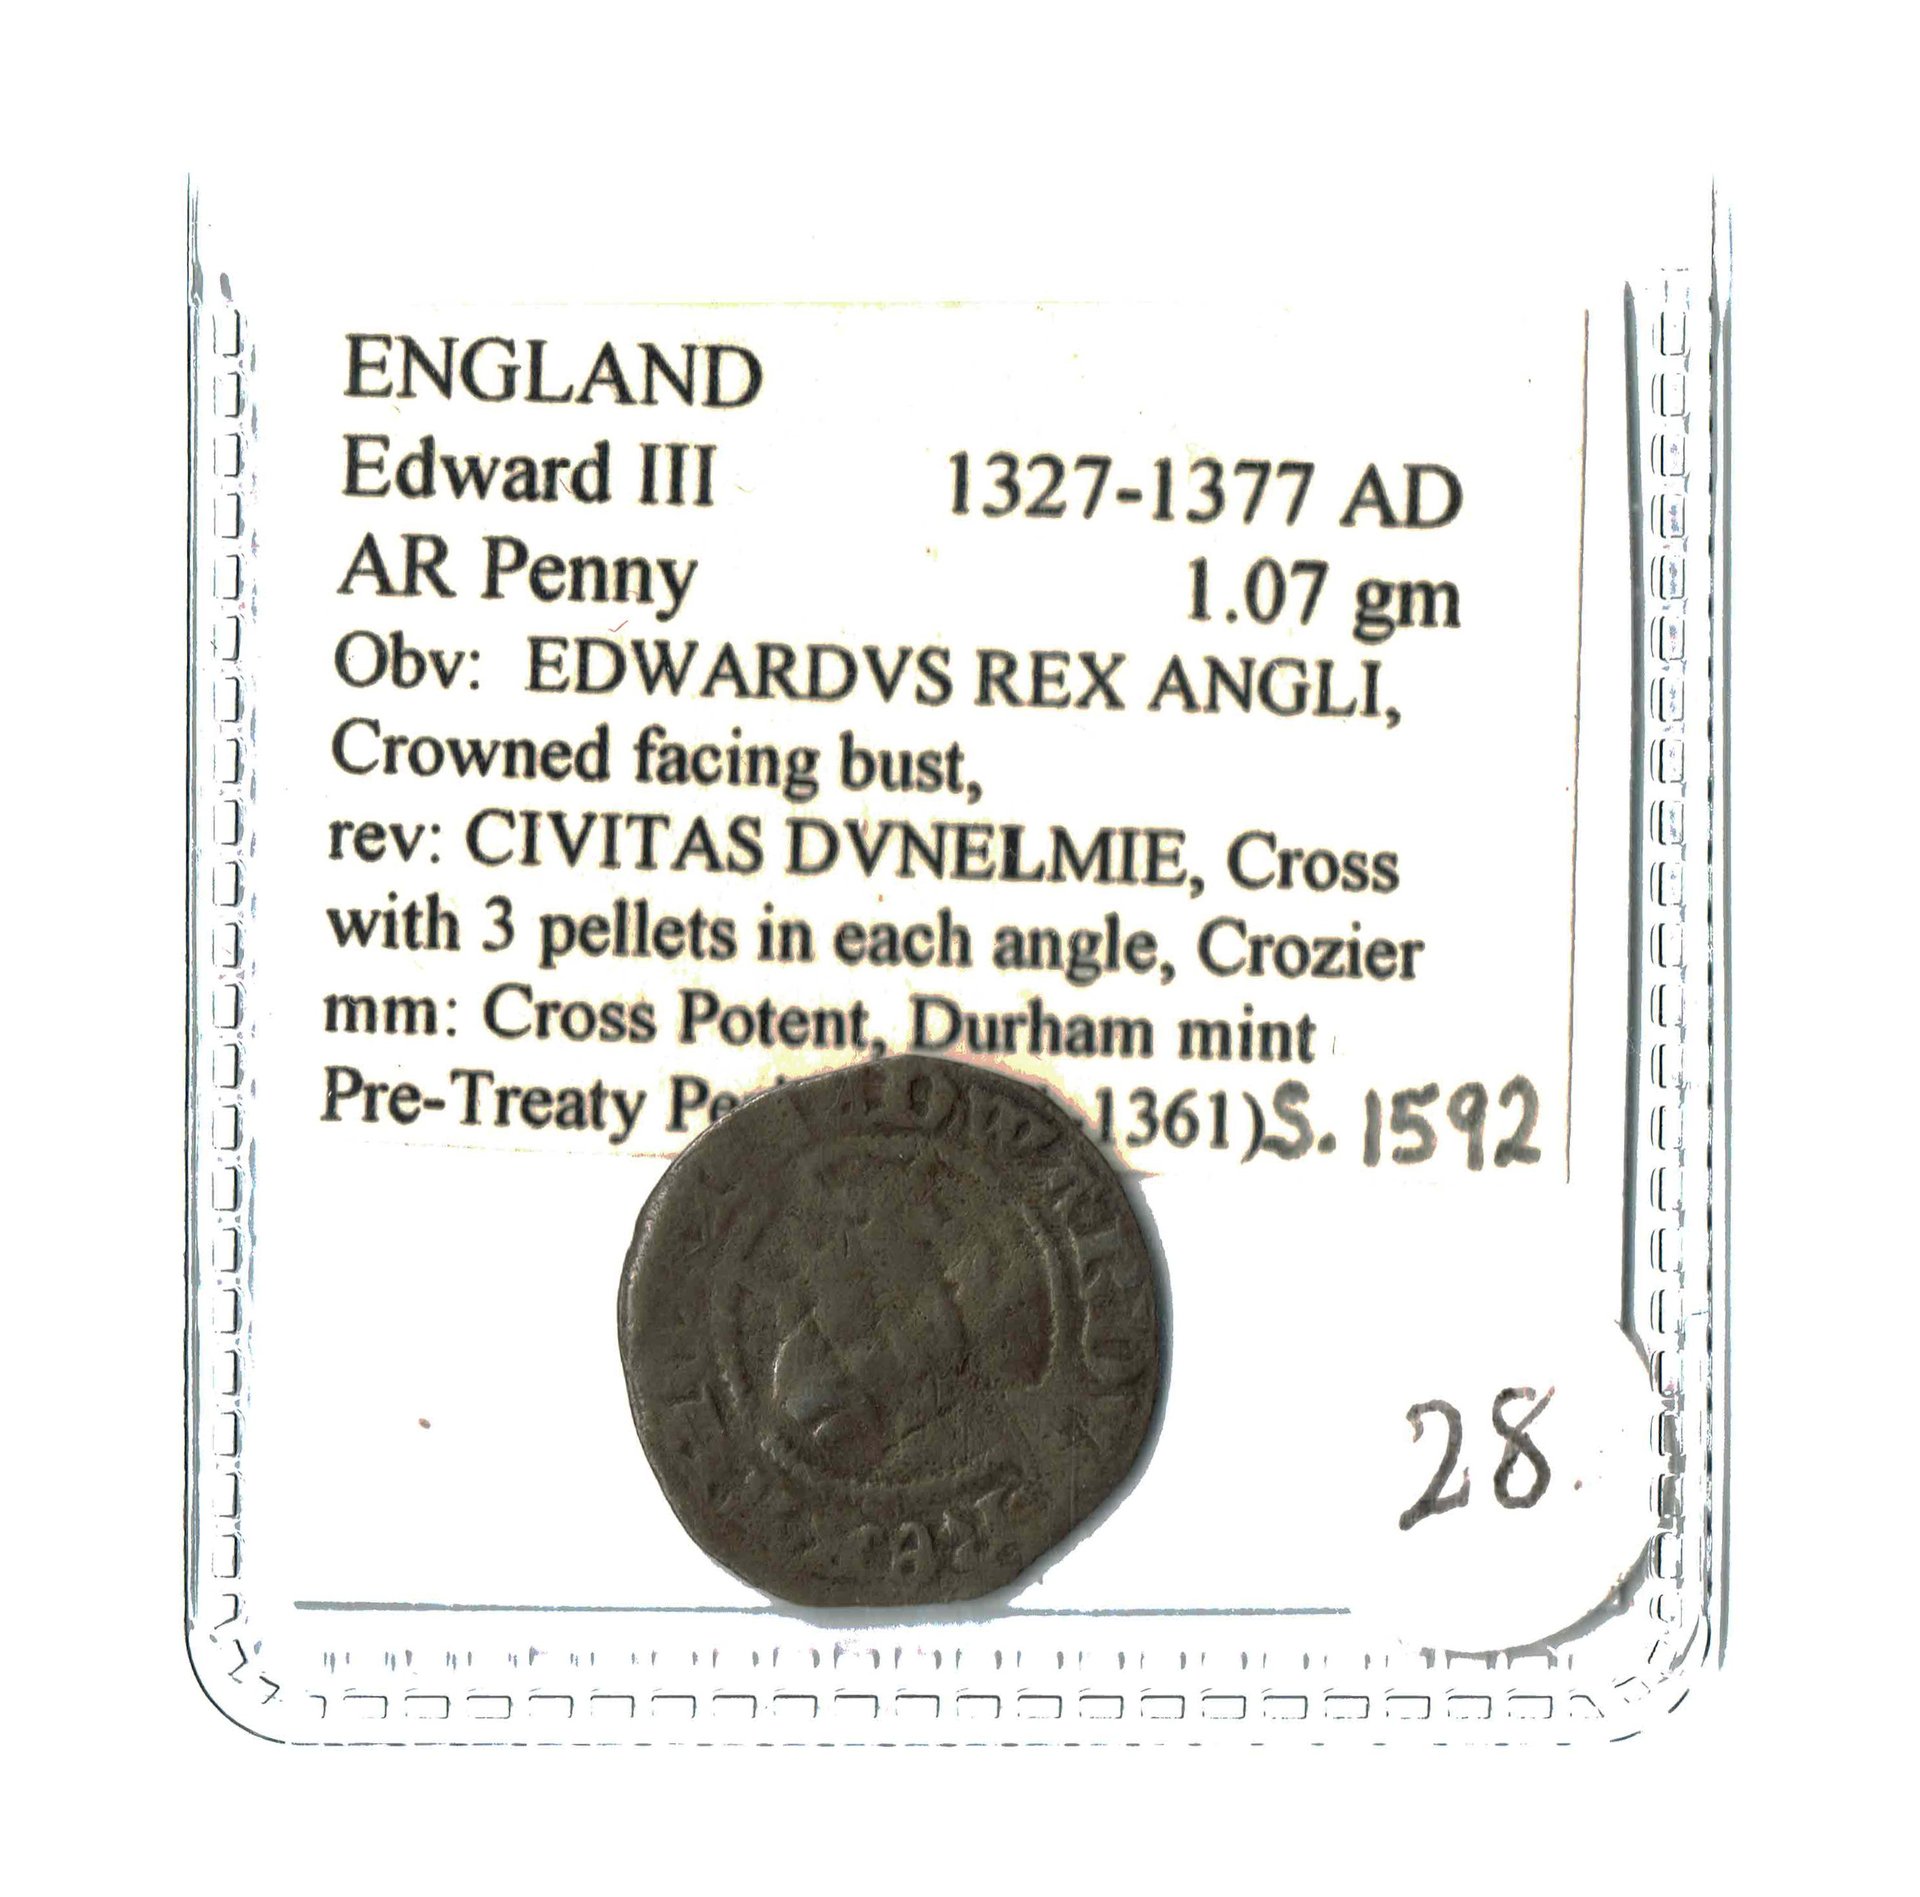 Edward III AR Penny_000001.jpg